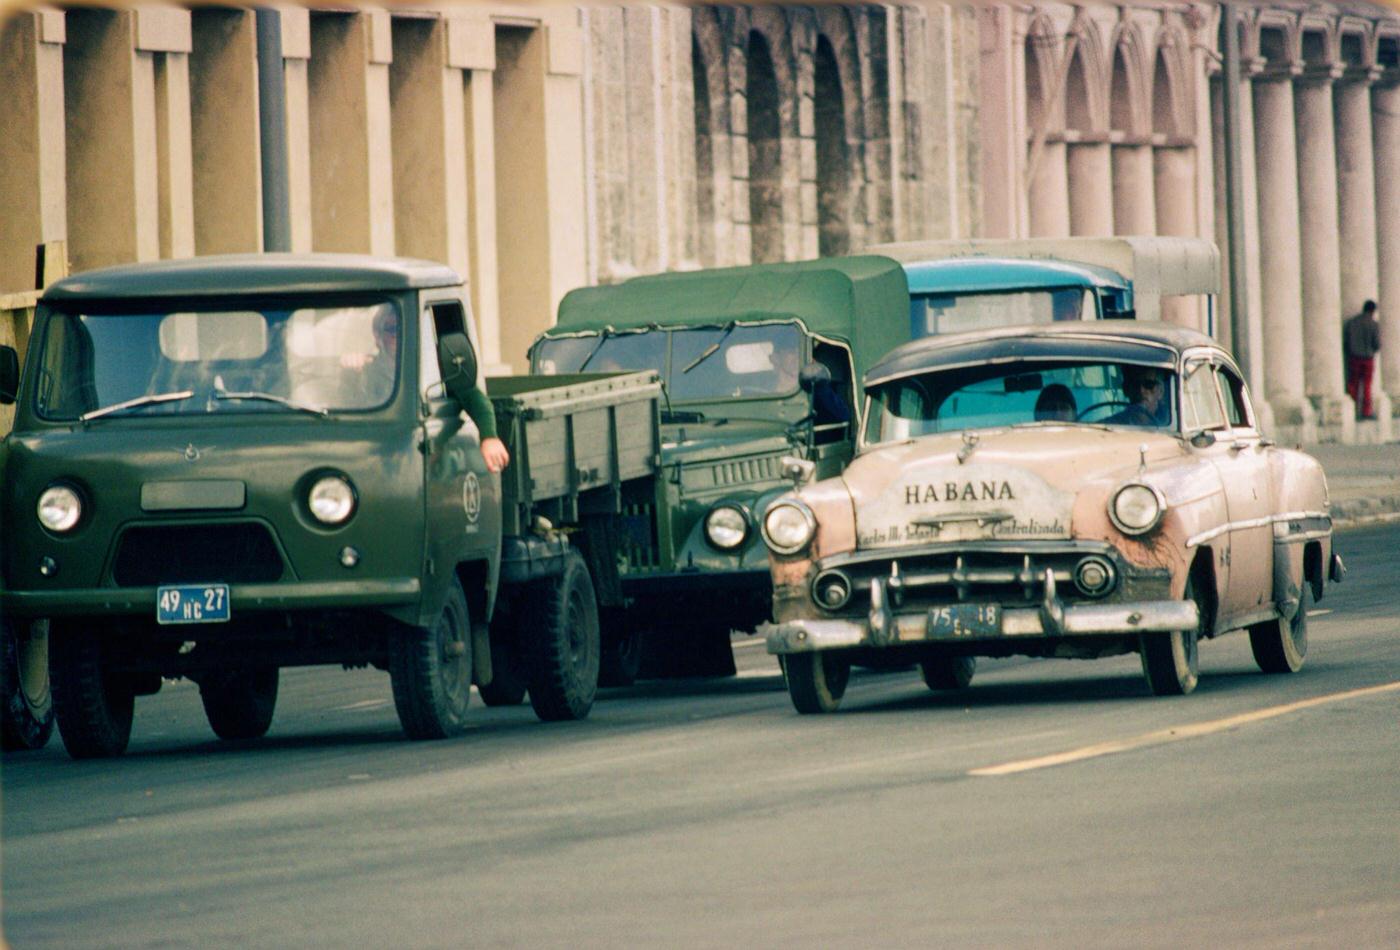 Cuban military vehicles on the streets of Havana, Cuba, 1979.